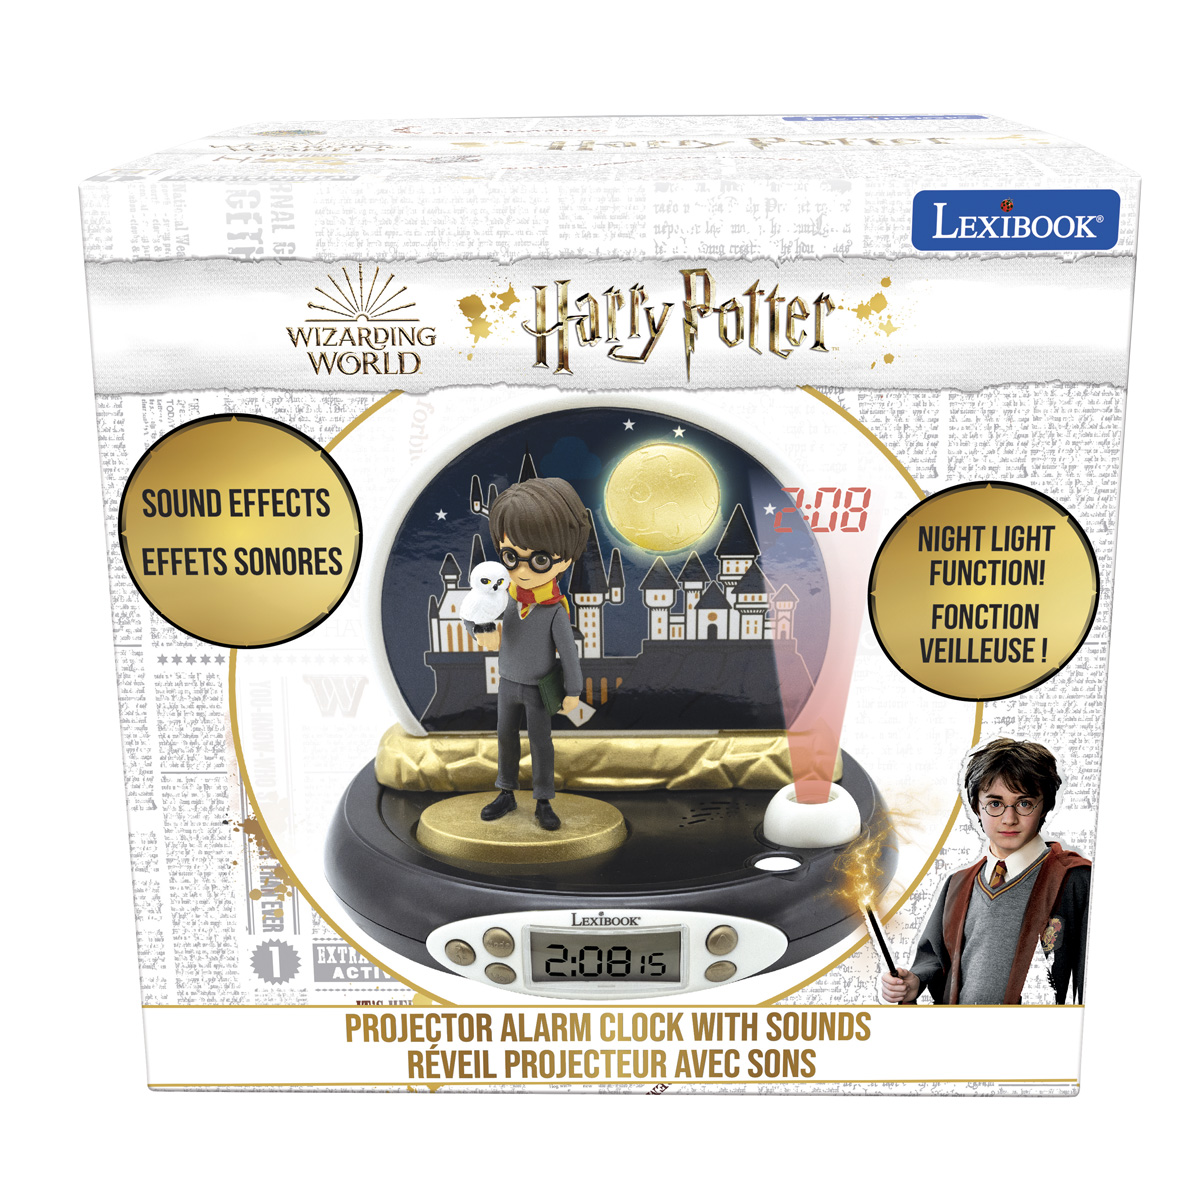 3D Schwarz/Weiß Projektionswecker LEXIBOOK Harry Potter Projektionswecker,